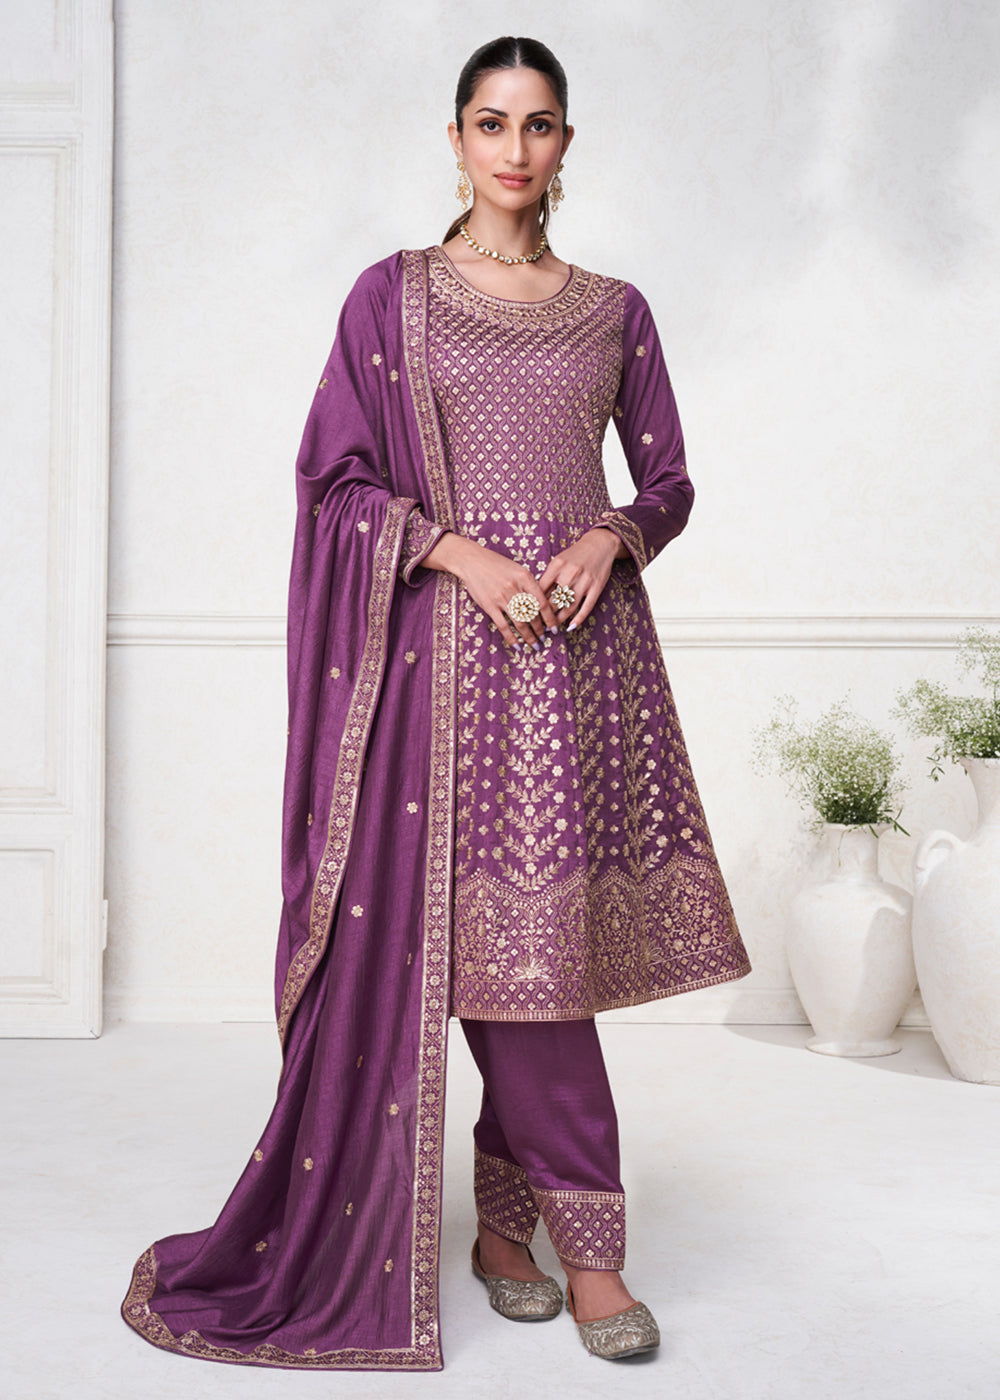 Buy Now Magenta Purple Punjabi Style Silk Embroidered Salwar Suit Online in USA, UK, Canada, Germany, Australia & Worldwide at Empress Clothing. 